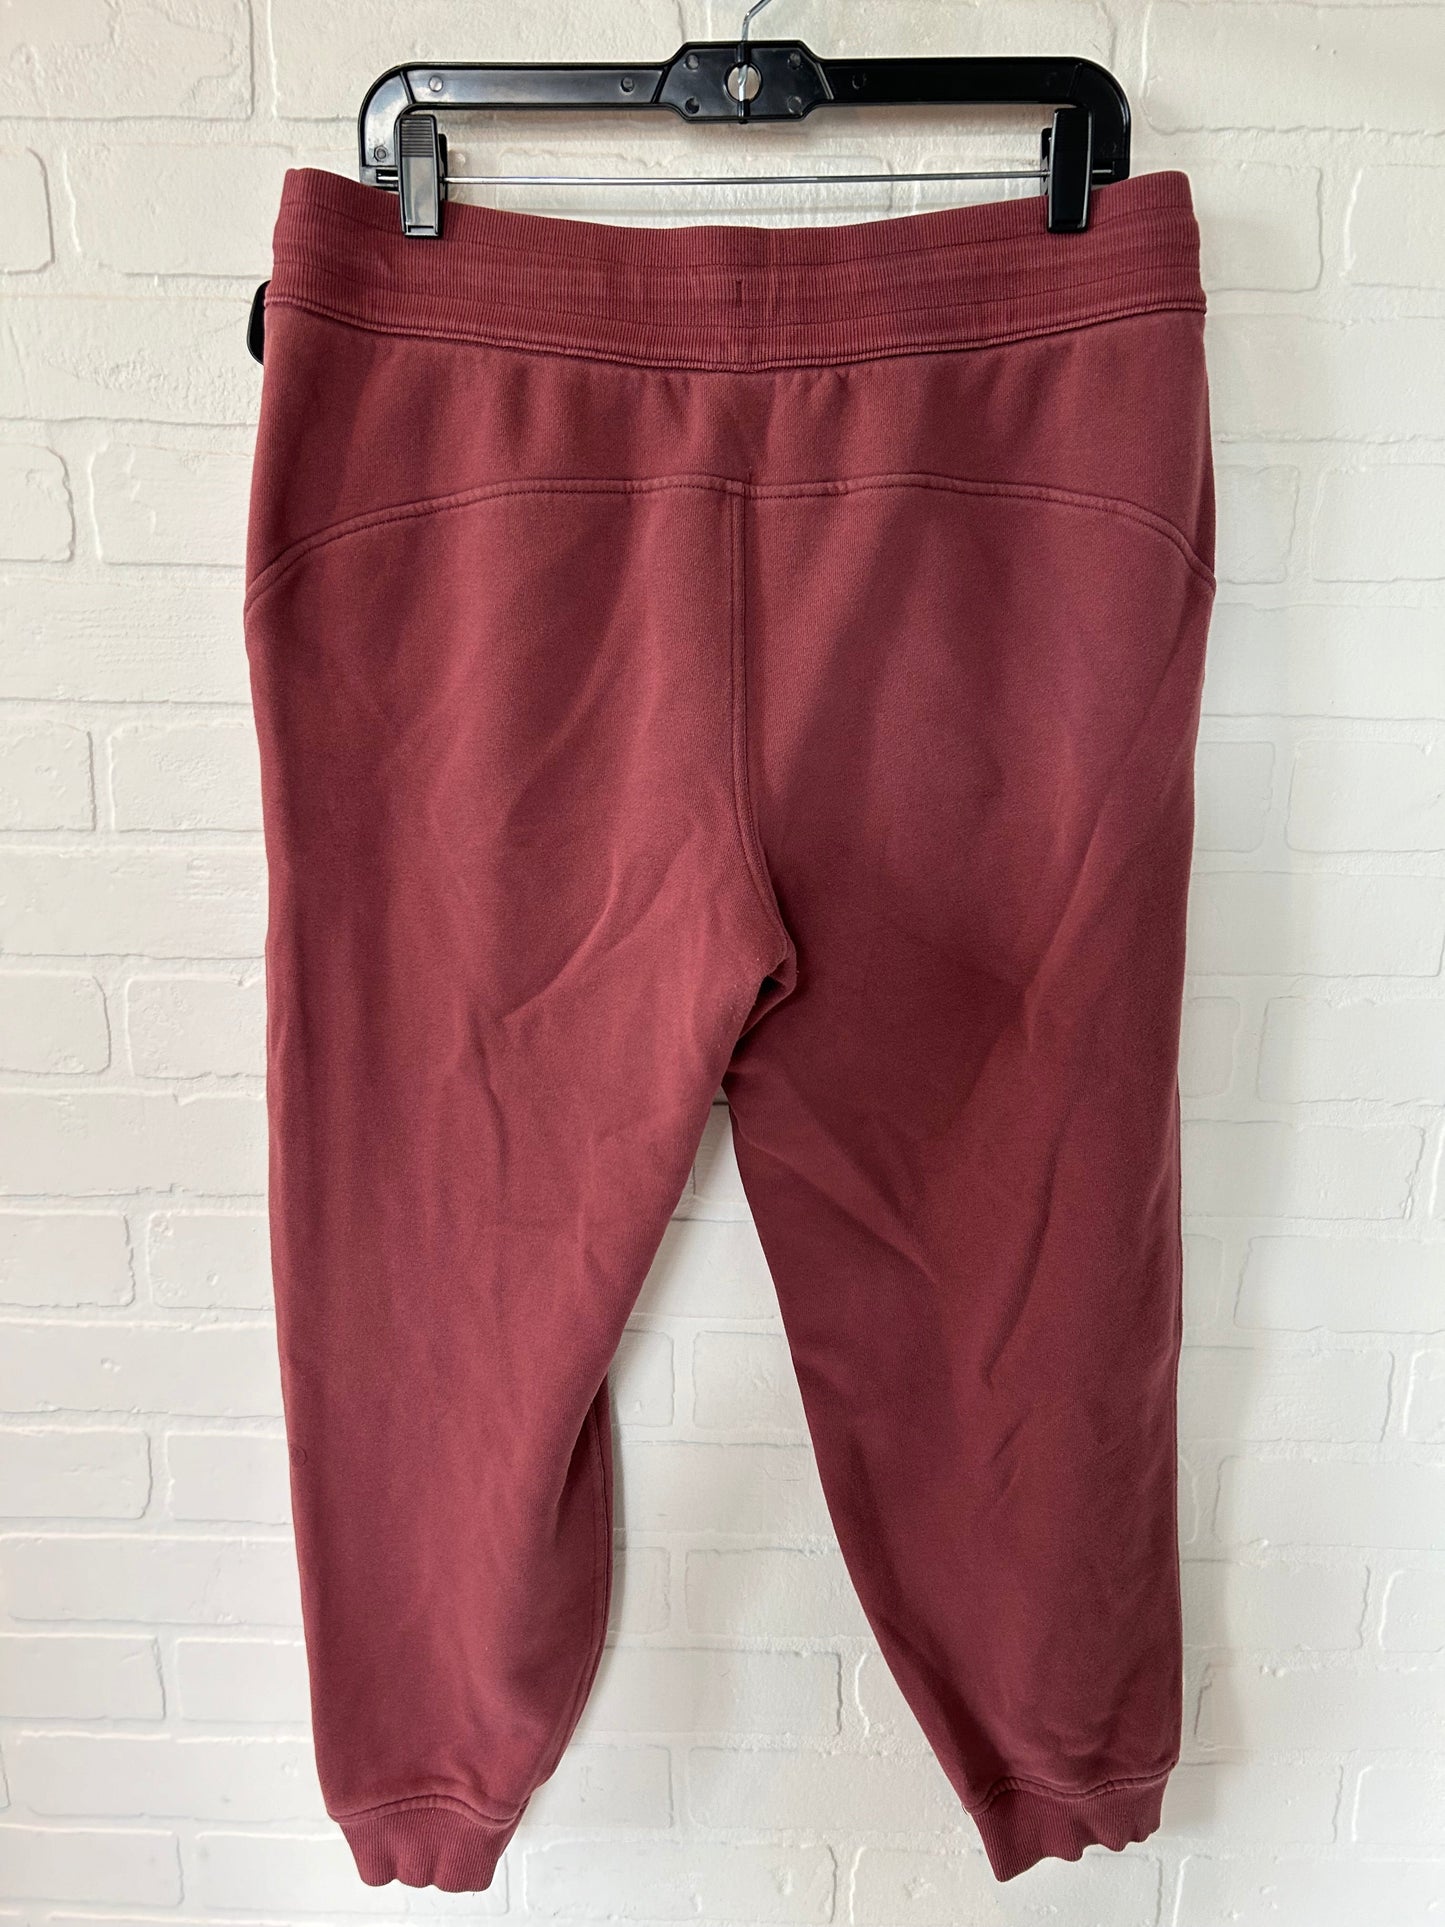 Red Athletic Pants Lululemon, Size 10